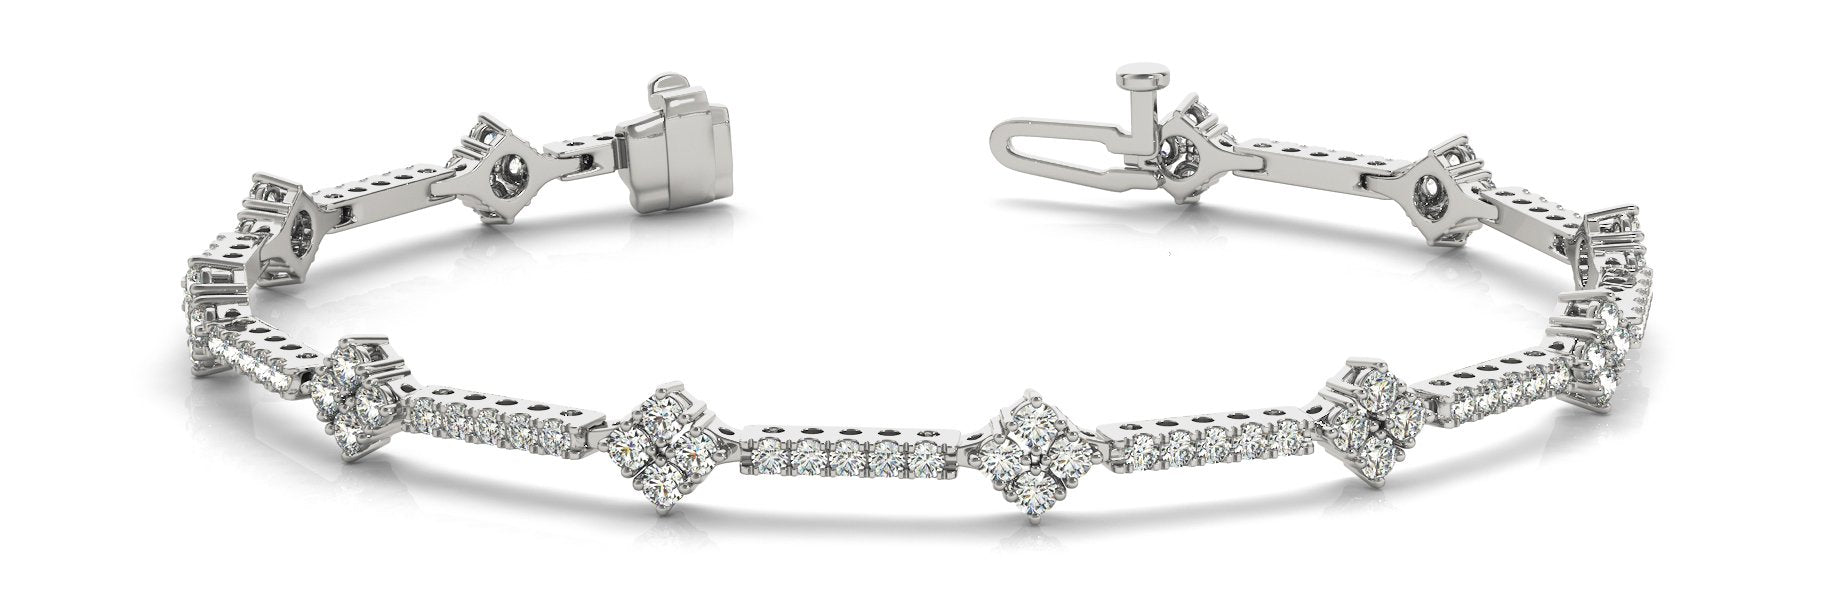 Fancy Diamond Bracelet Ladies 1.68ct tw - 14kt White Gold